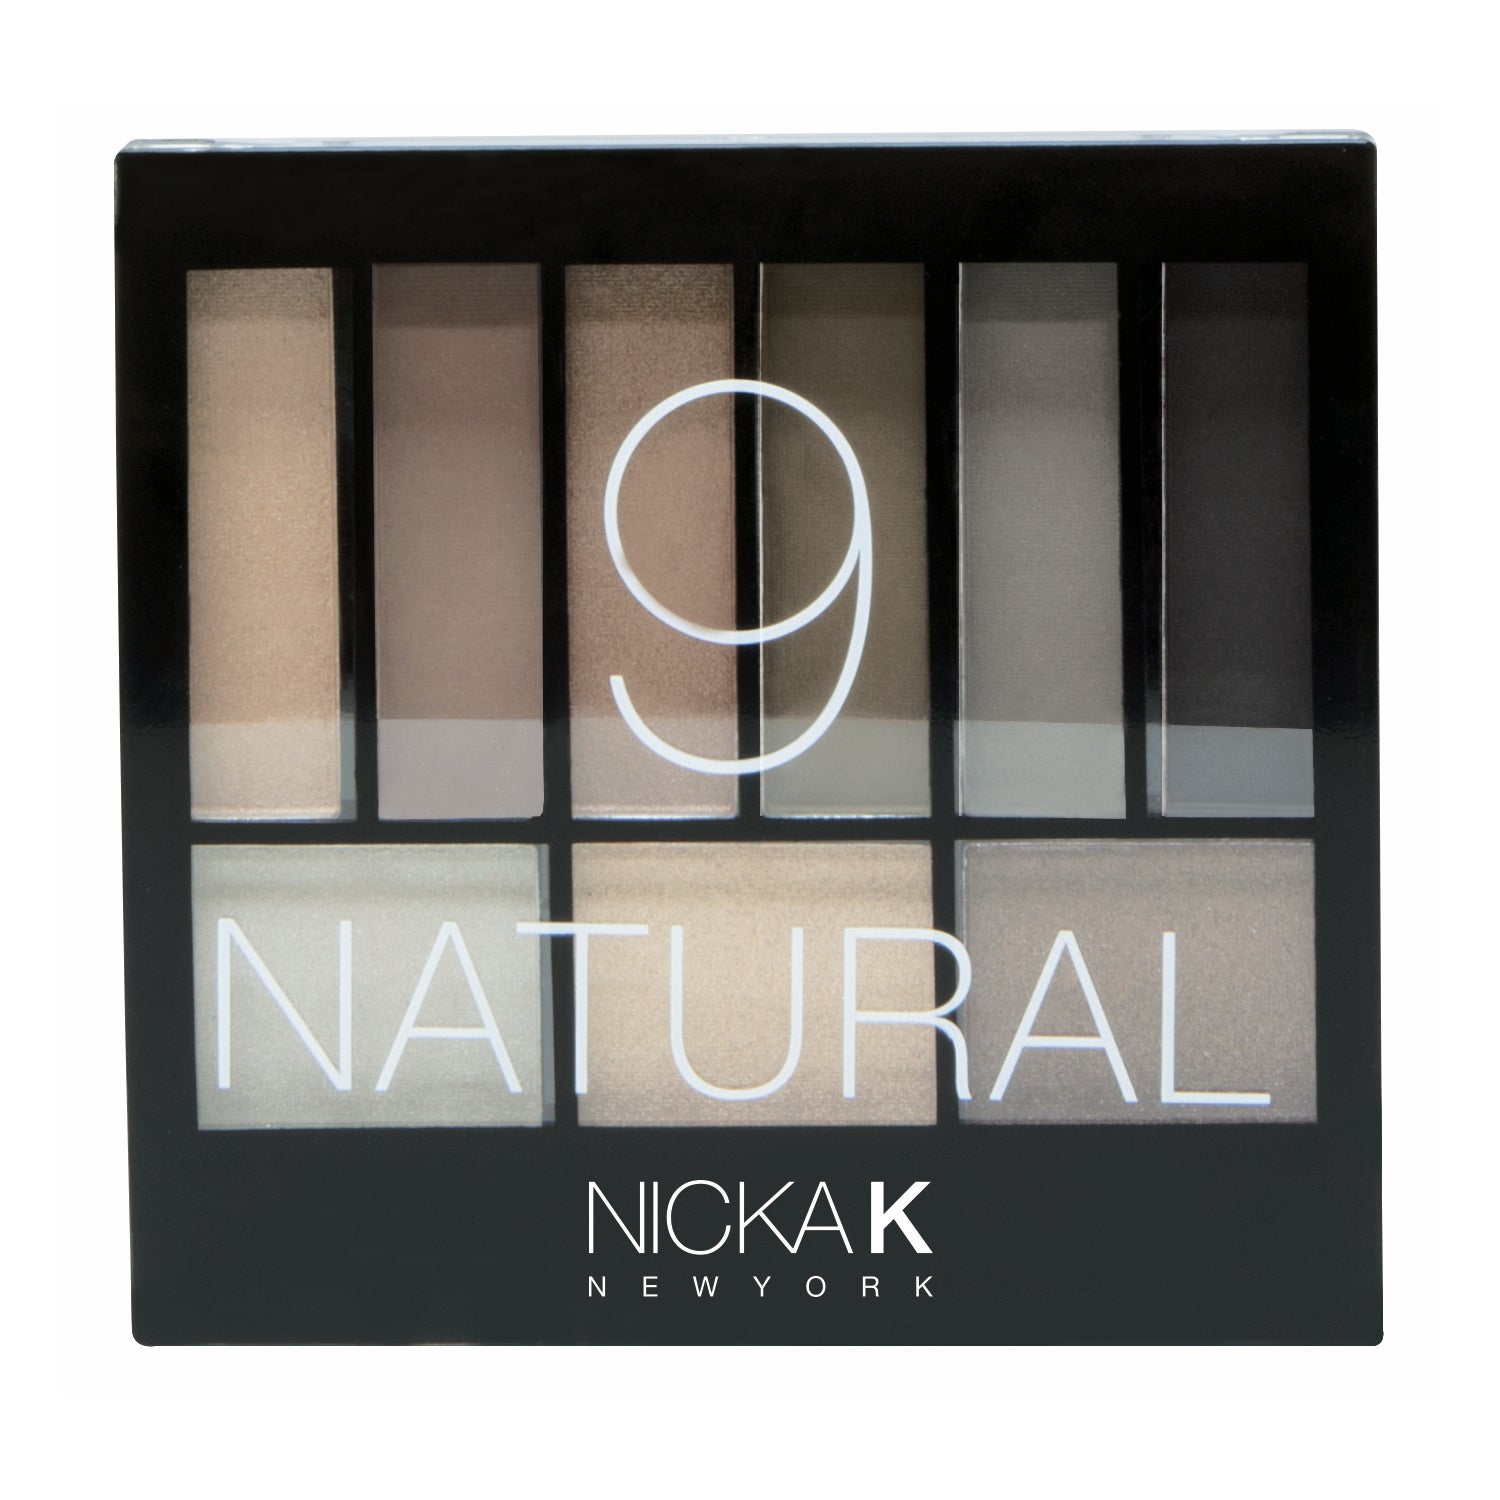 NICKA K Perfect 9 NATURAL Eyeshadow Palette Set